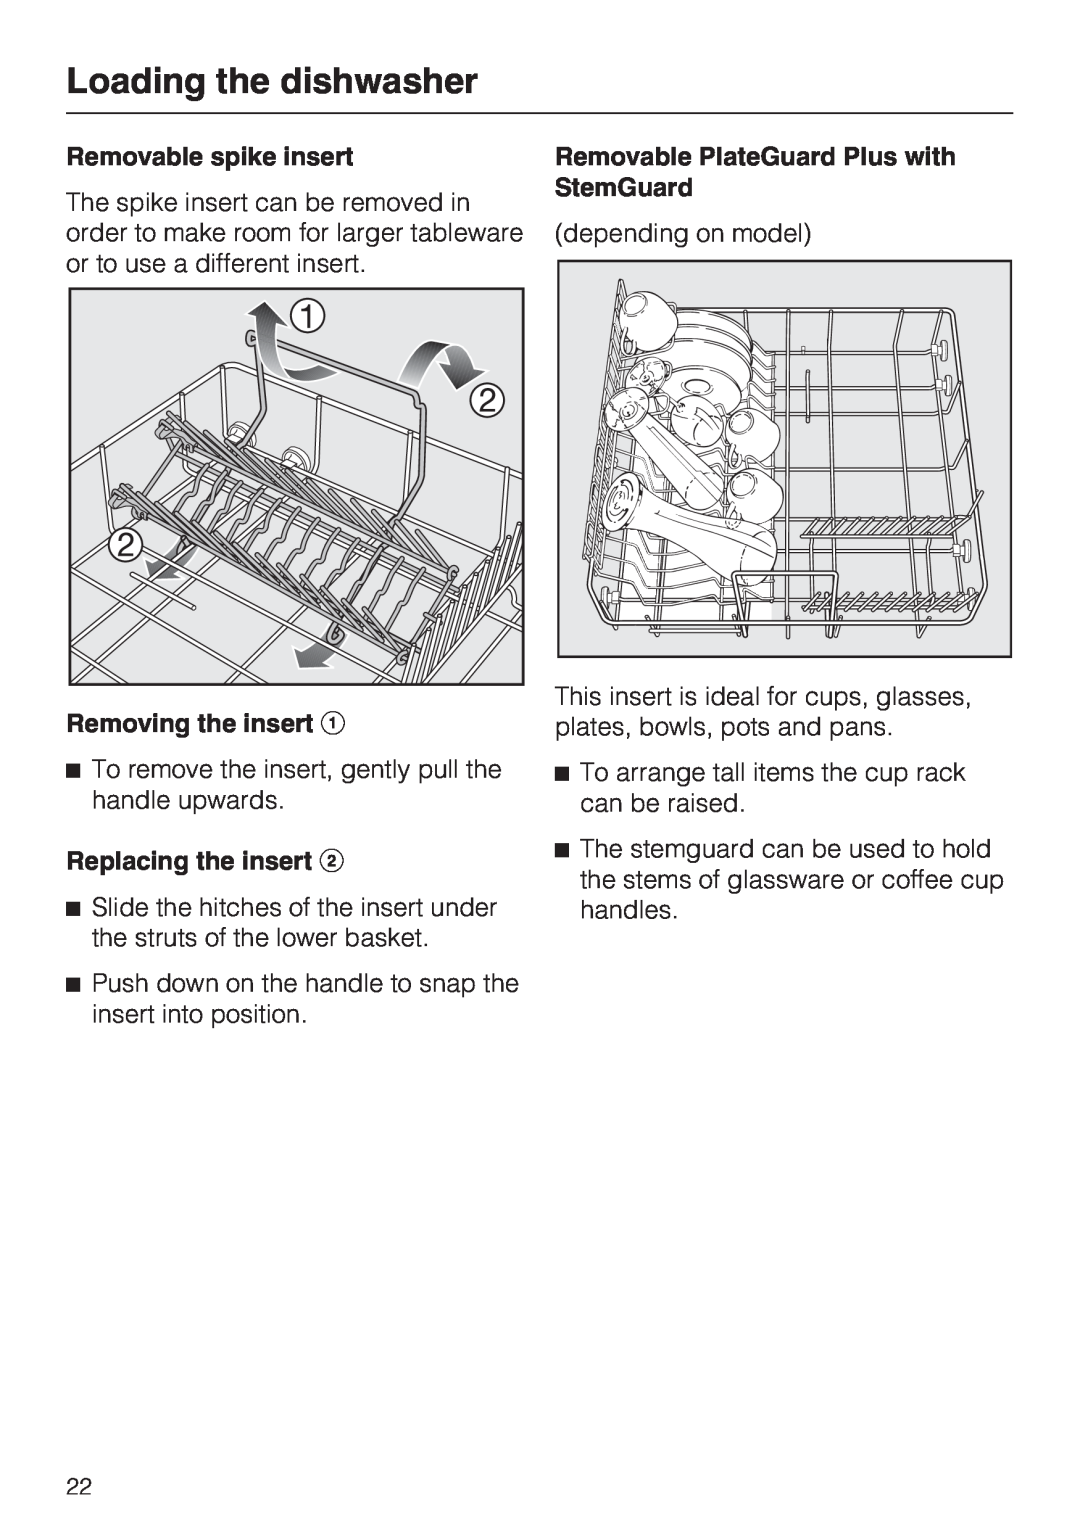 Miele G 2143 manual Loading the dishwasher, Removable spike insert, Removing the insert, Replacing the insert 